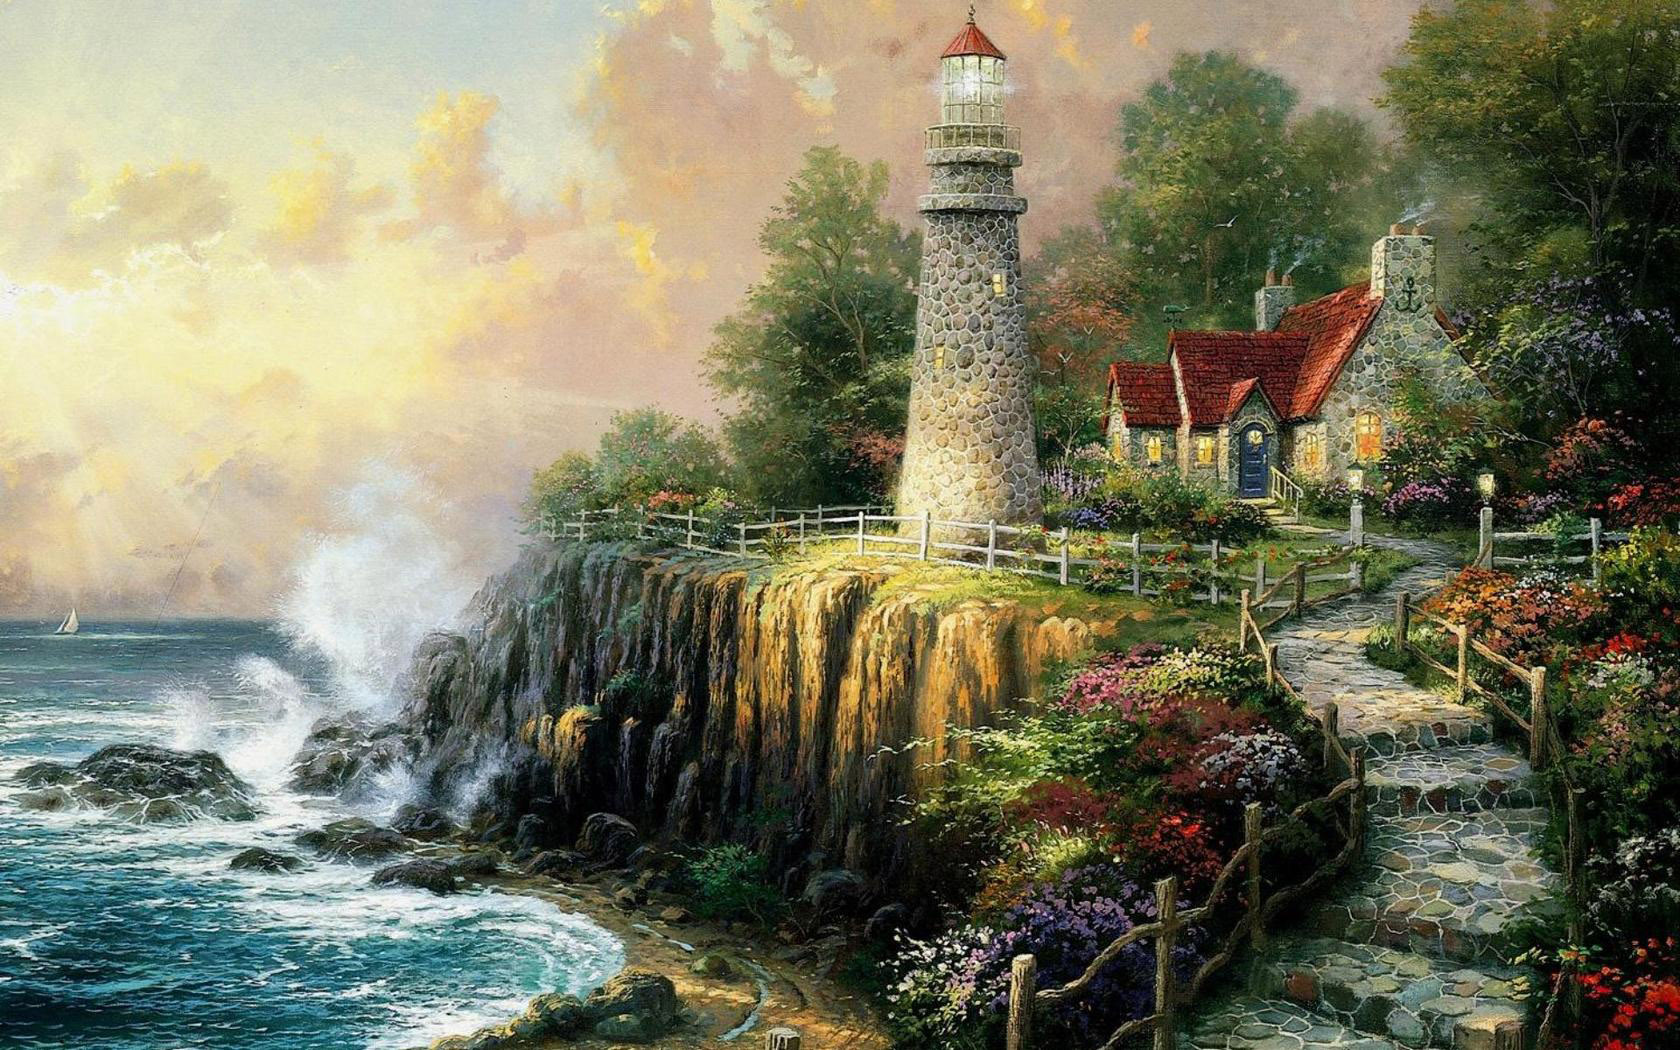 Oil painting seaside villa scenery desktop wallpaper